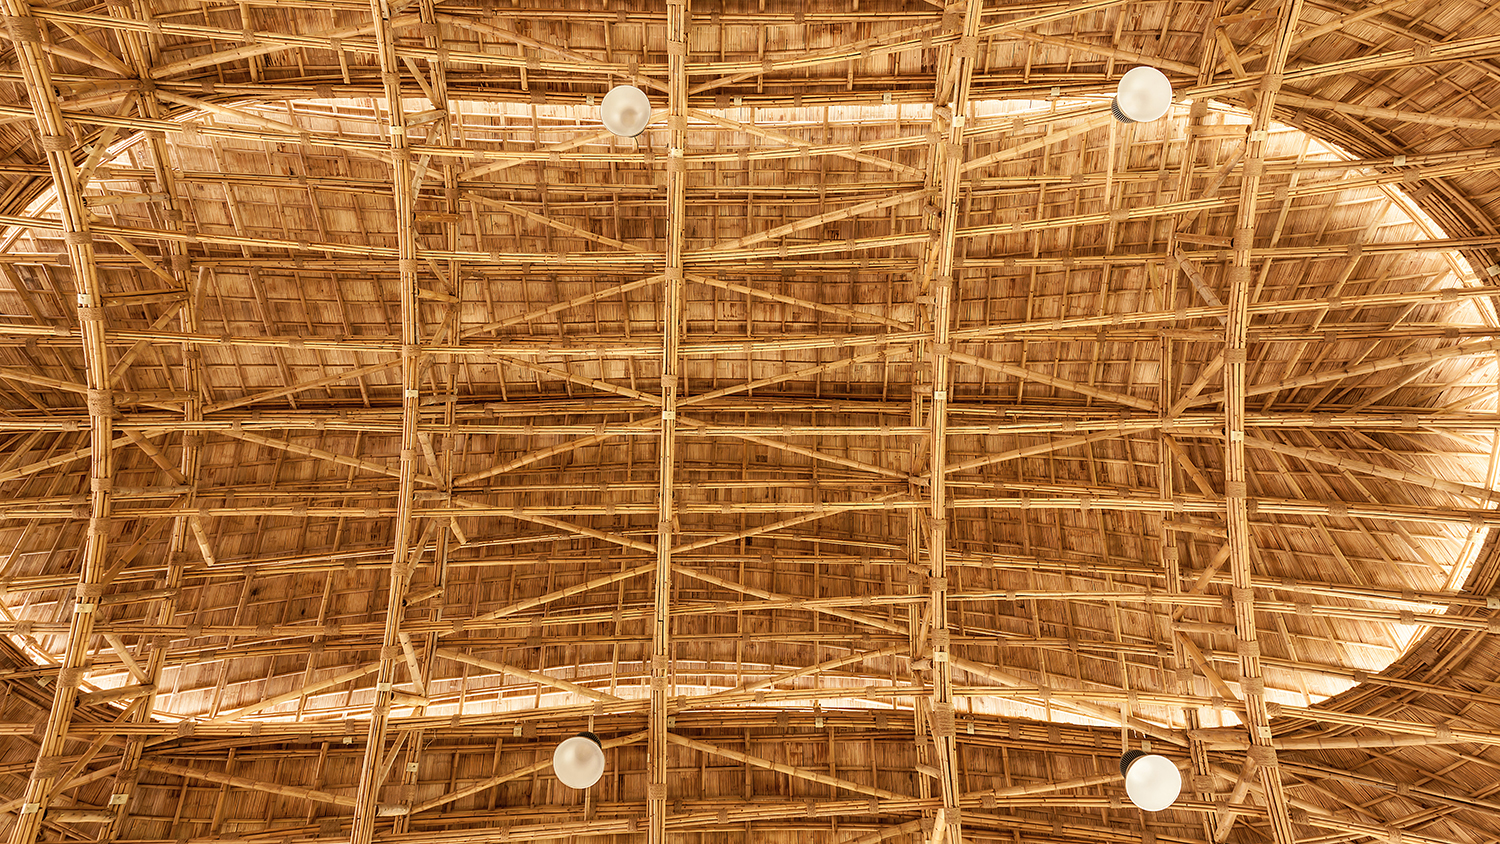 Panyaden International School Sports Hall Bamboo Architecture